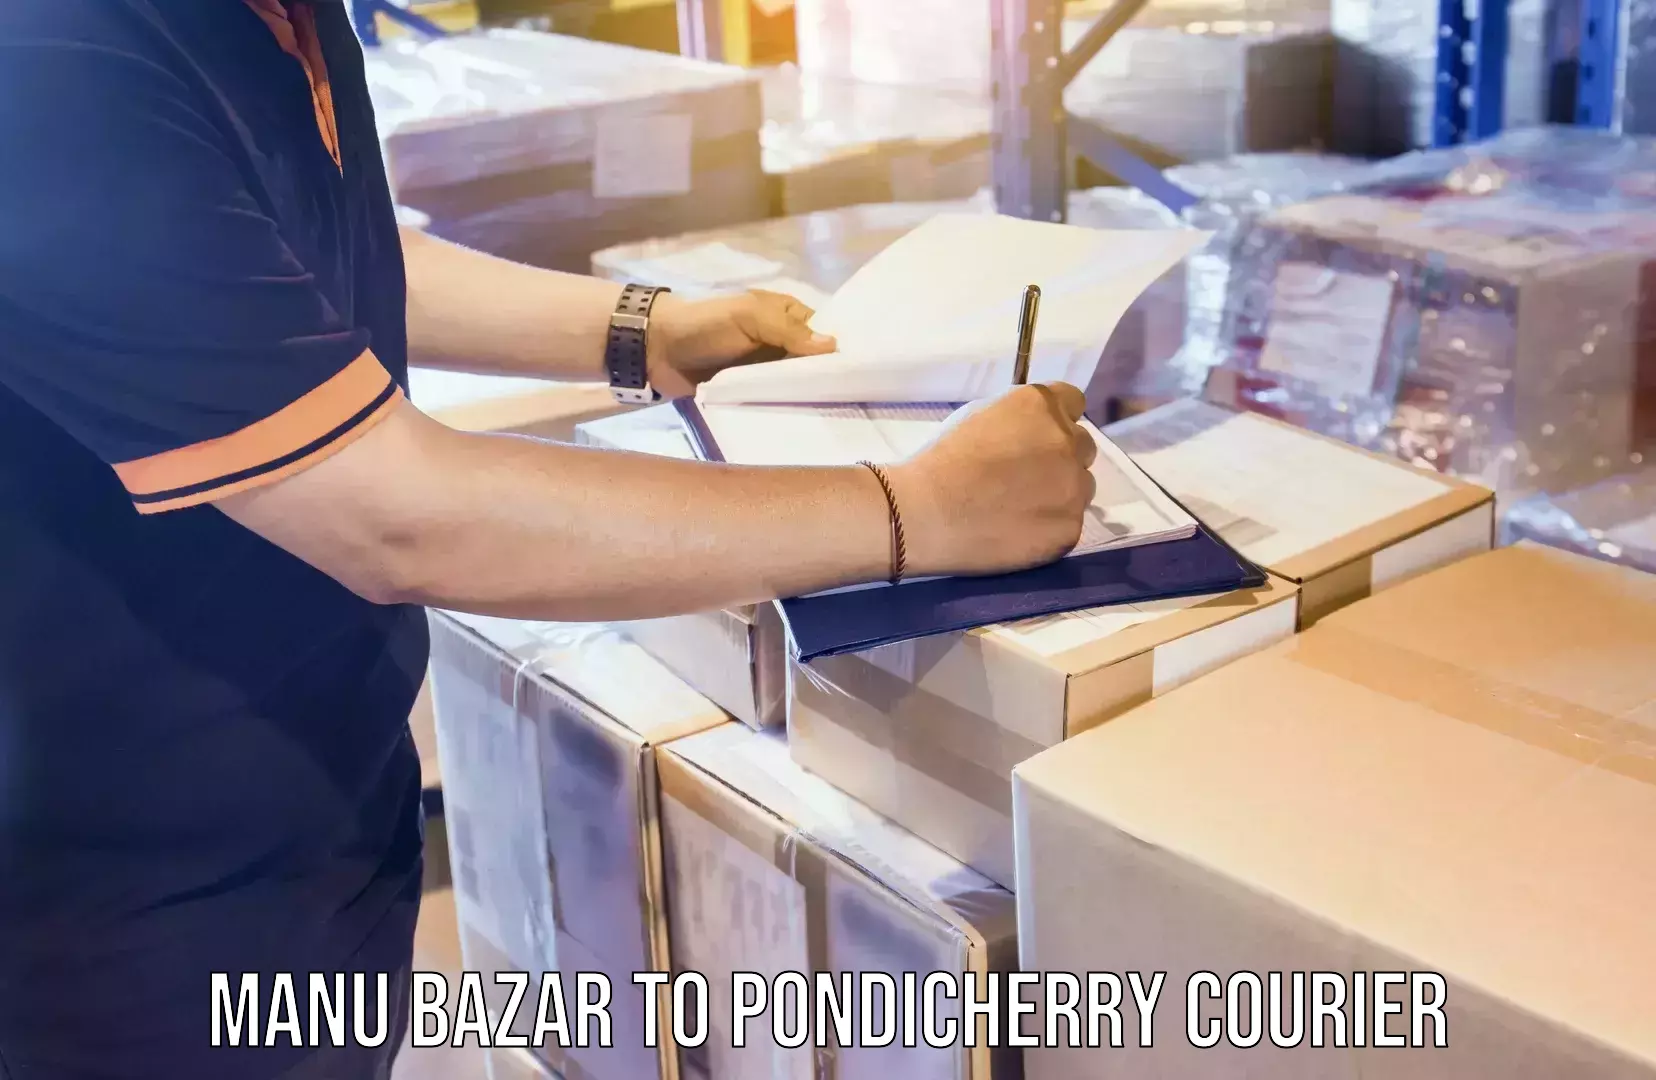 Next-day delivery options Manu Bazar to Pondicherry